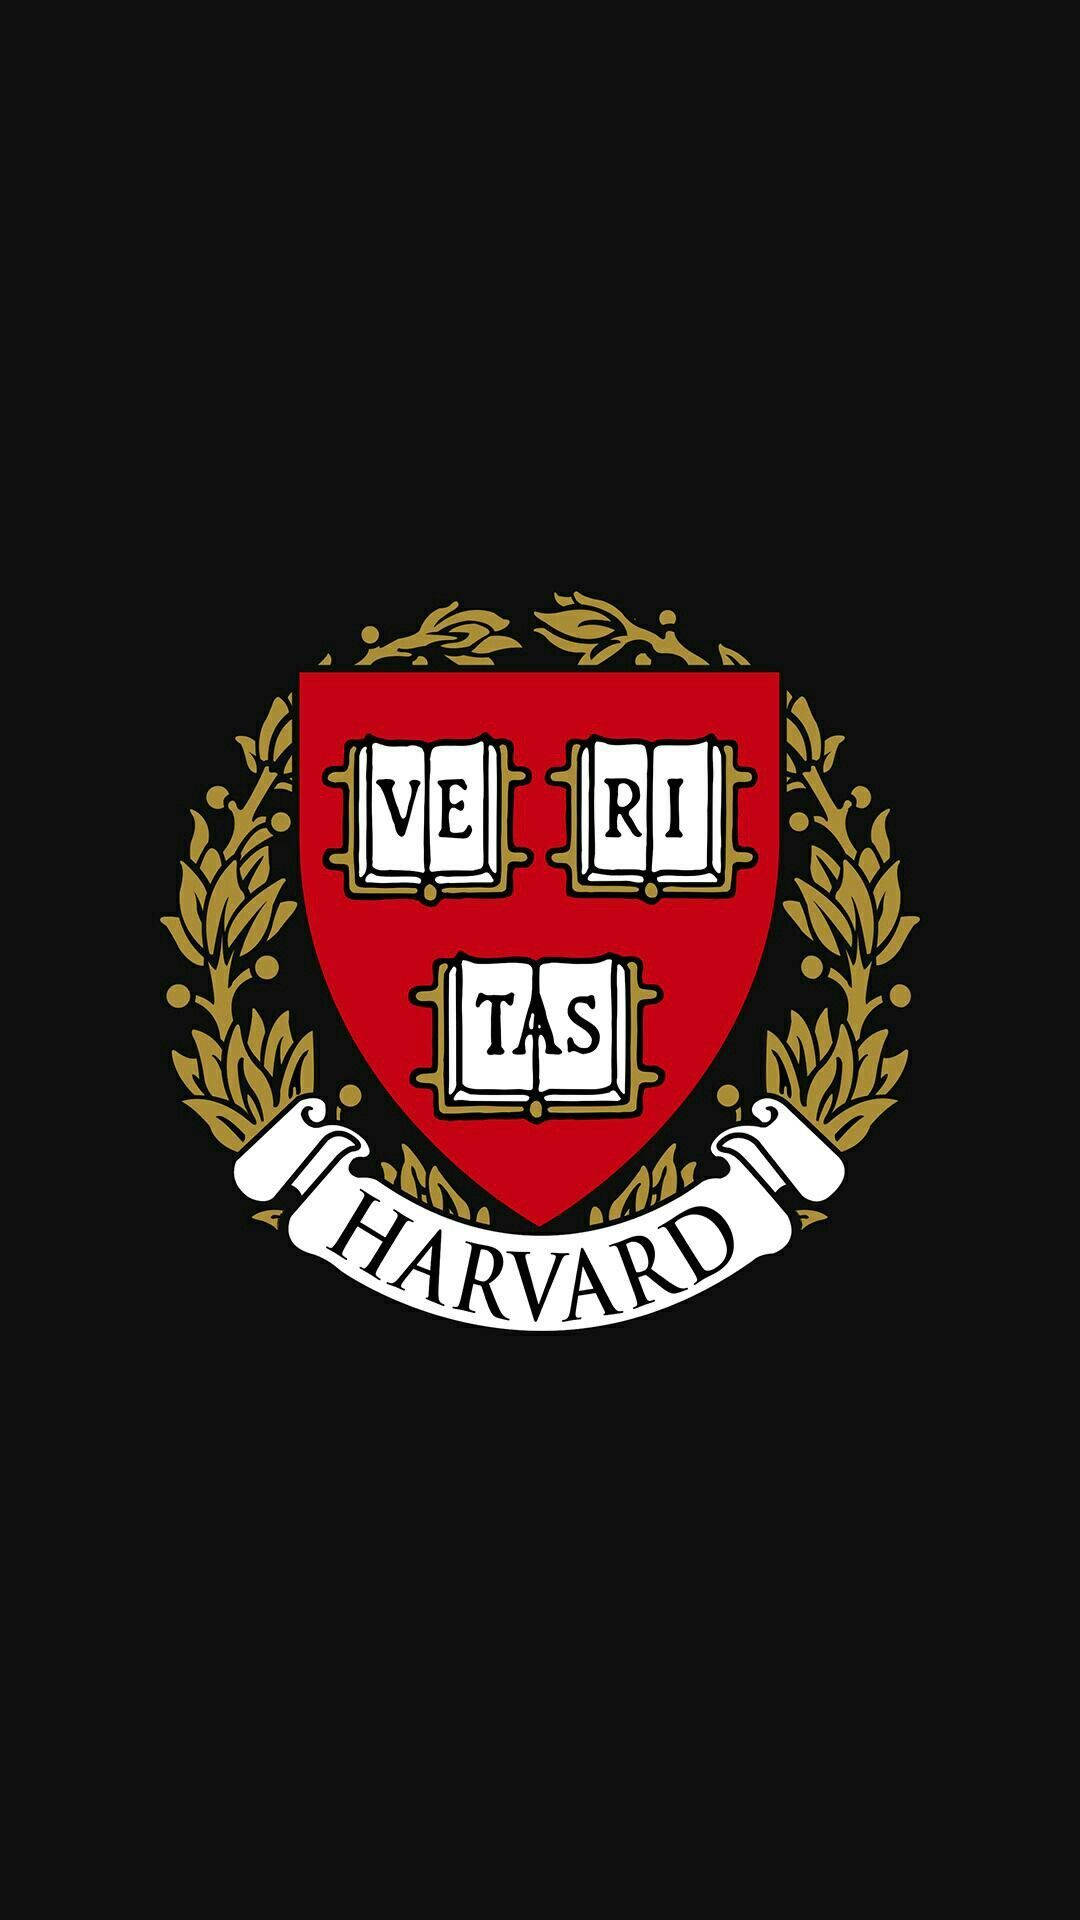 Harvarduniversity Vapen På Svart Bakgrund. Wallpaper